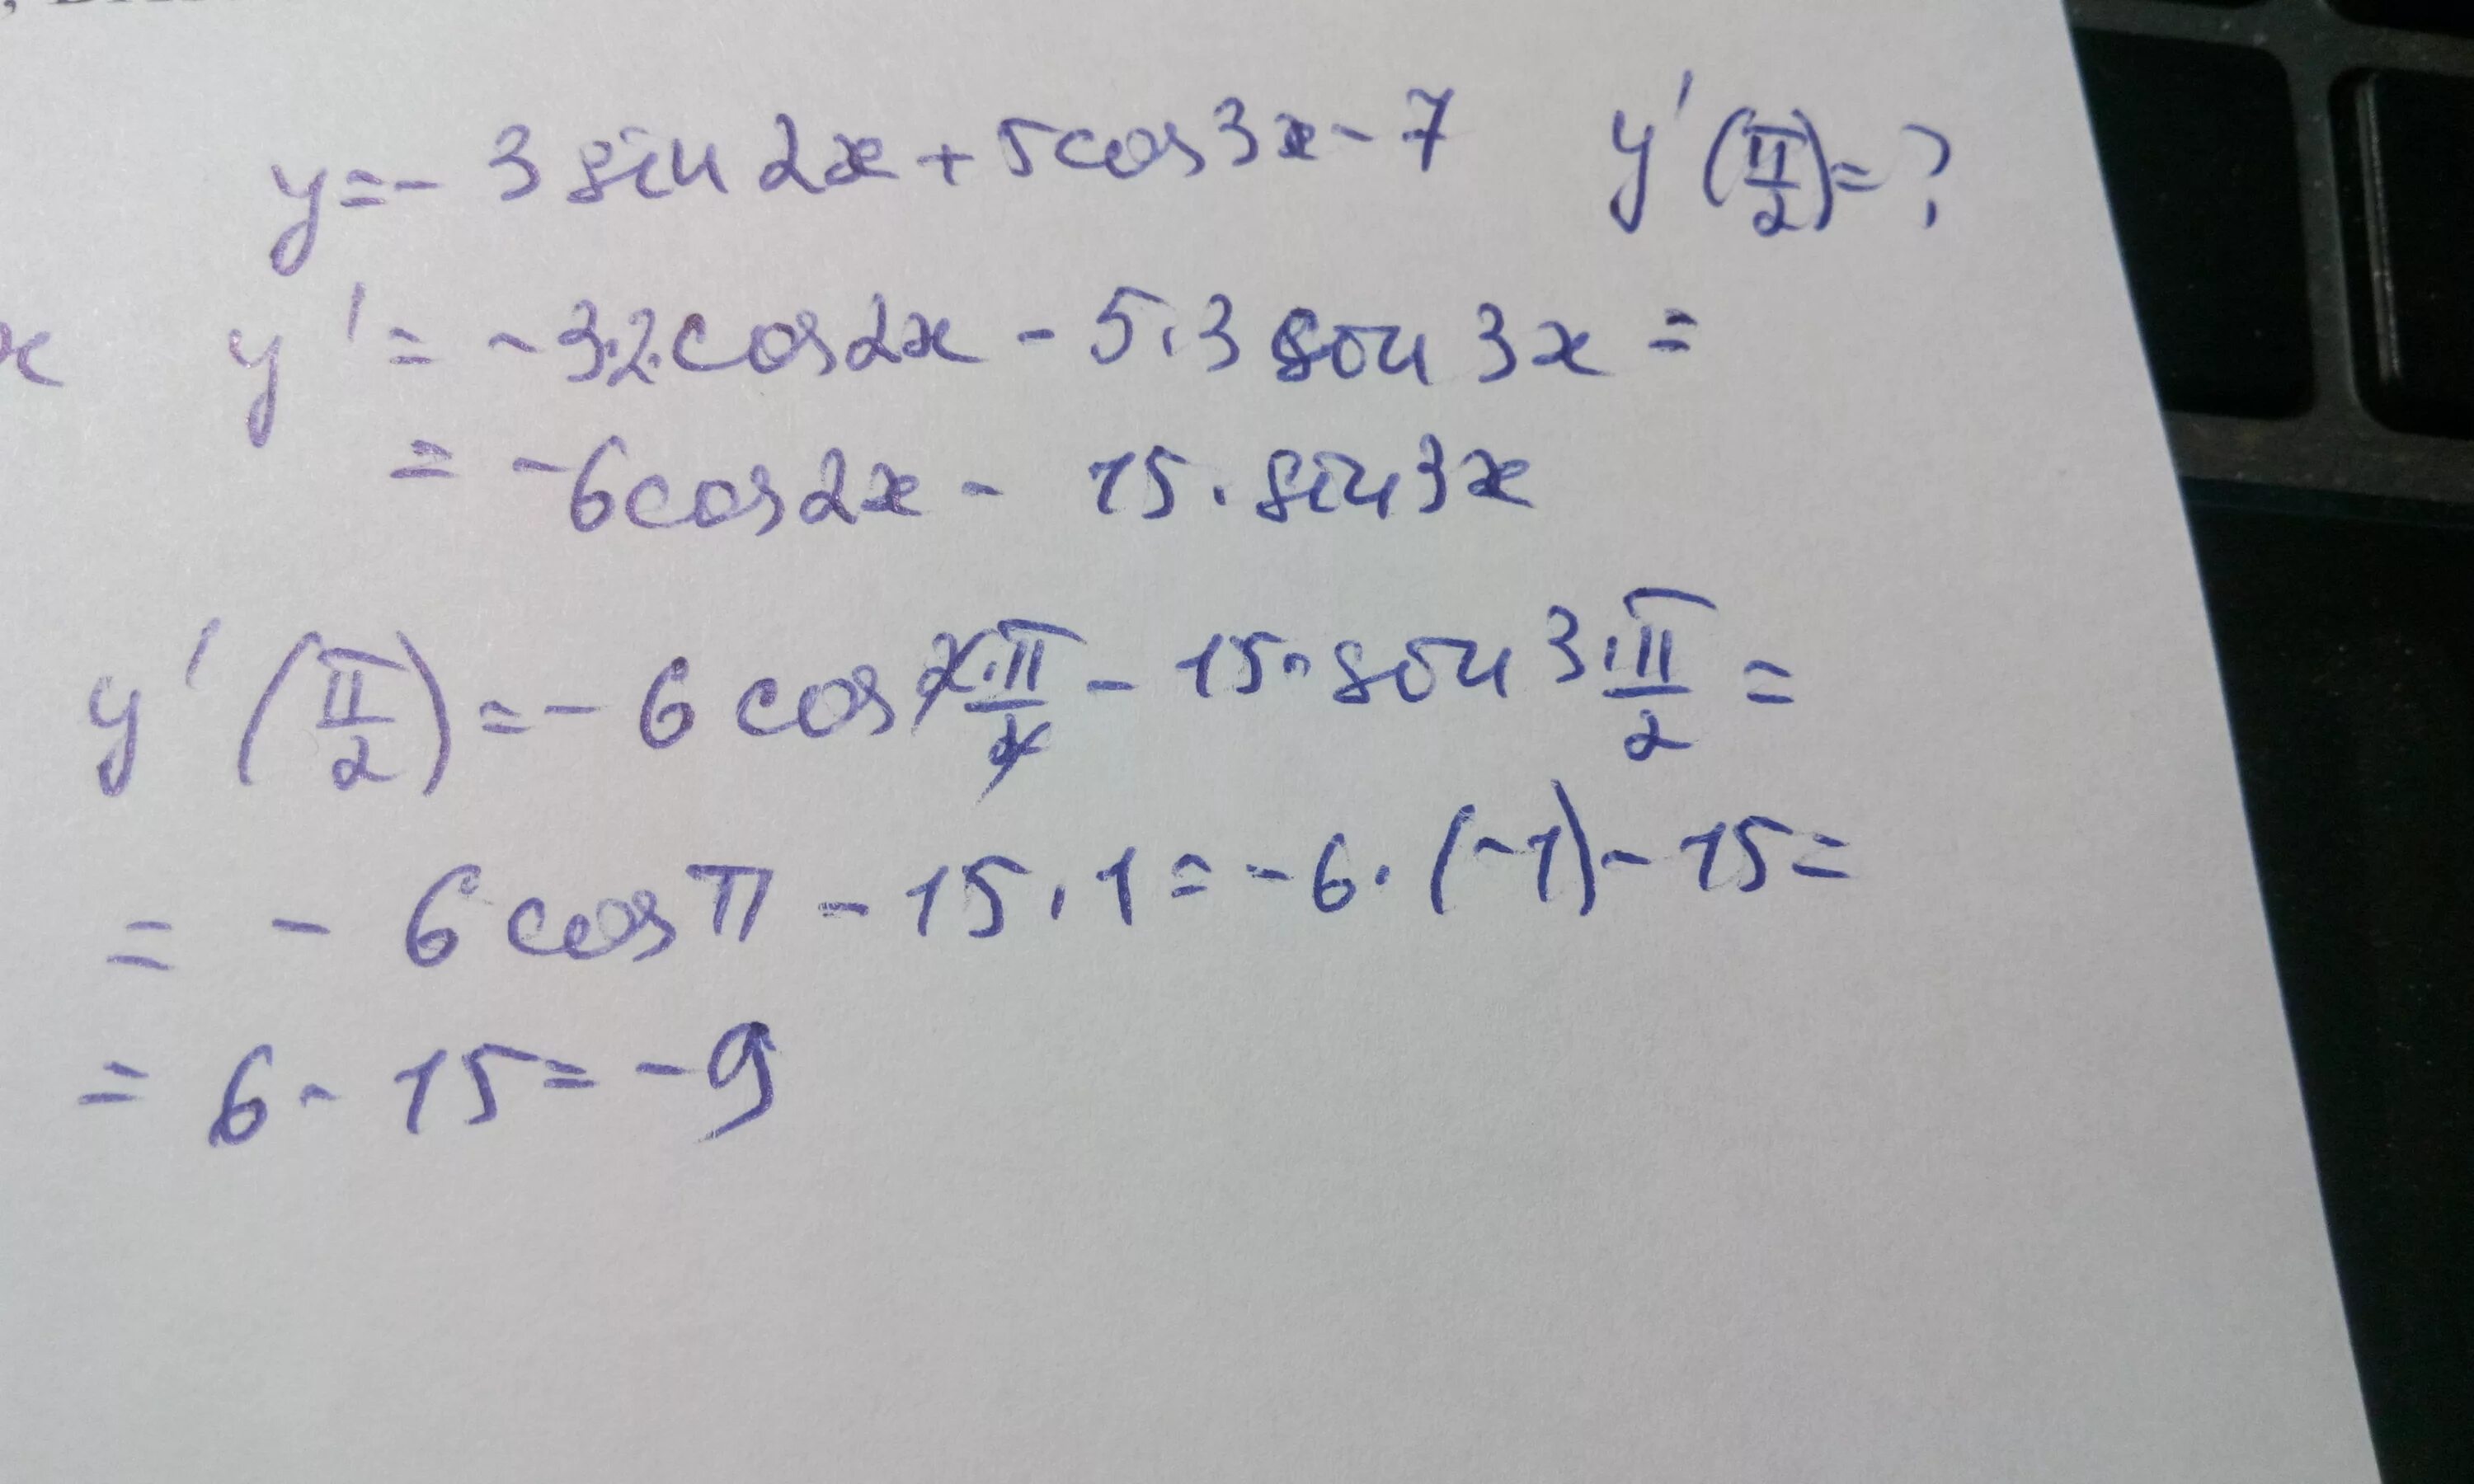 Y ln 7x 7x 7. Угловой коэффициент касательной y=5-2x. Угловой коэффициент x3+x2-5. 2cos^2 3x-5cos3x-3=0 [п 3п/2. Угловой коэффициент касательной 2.